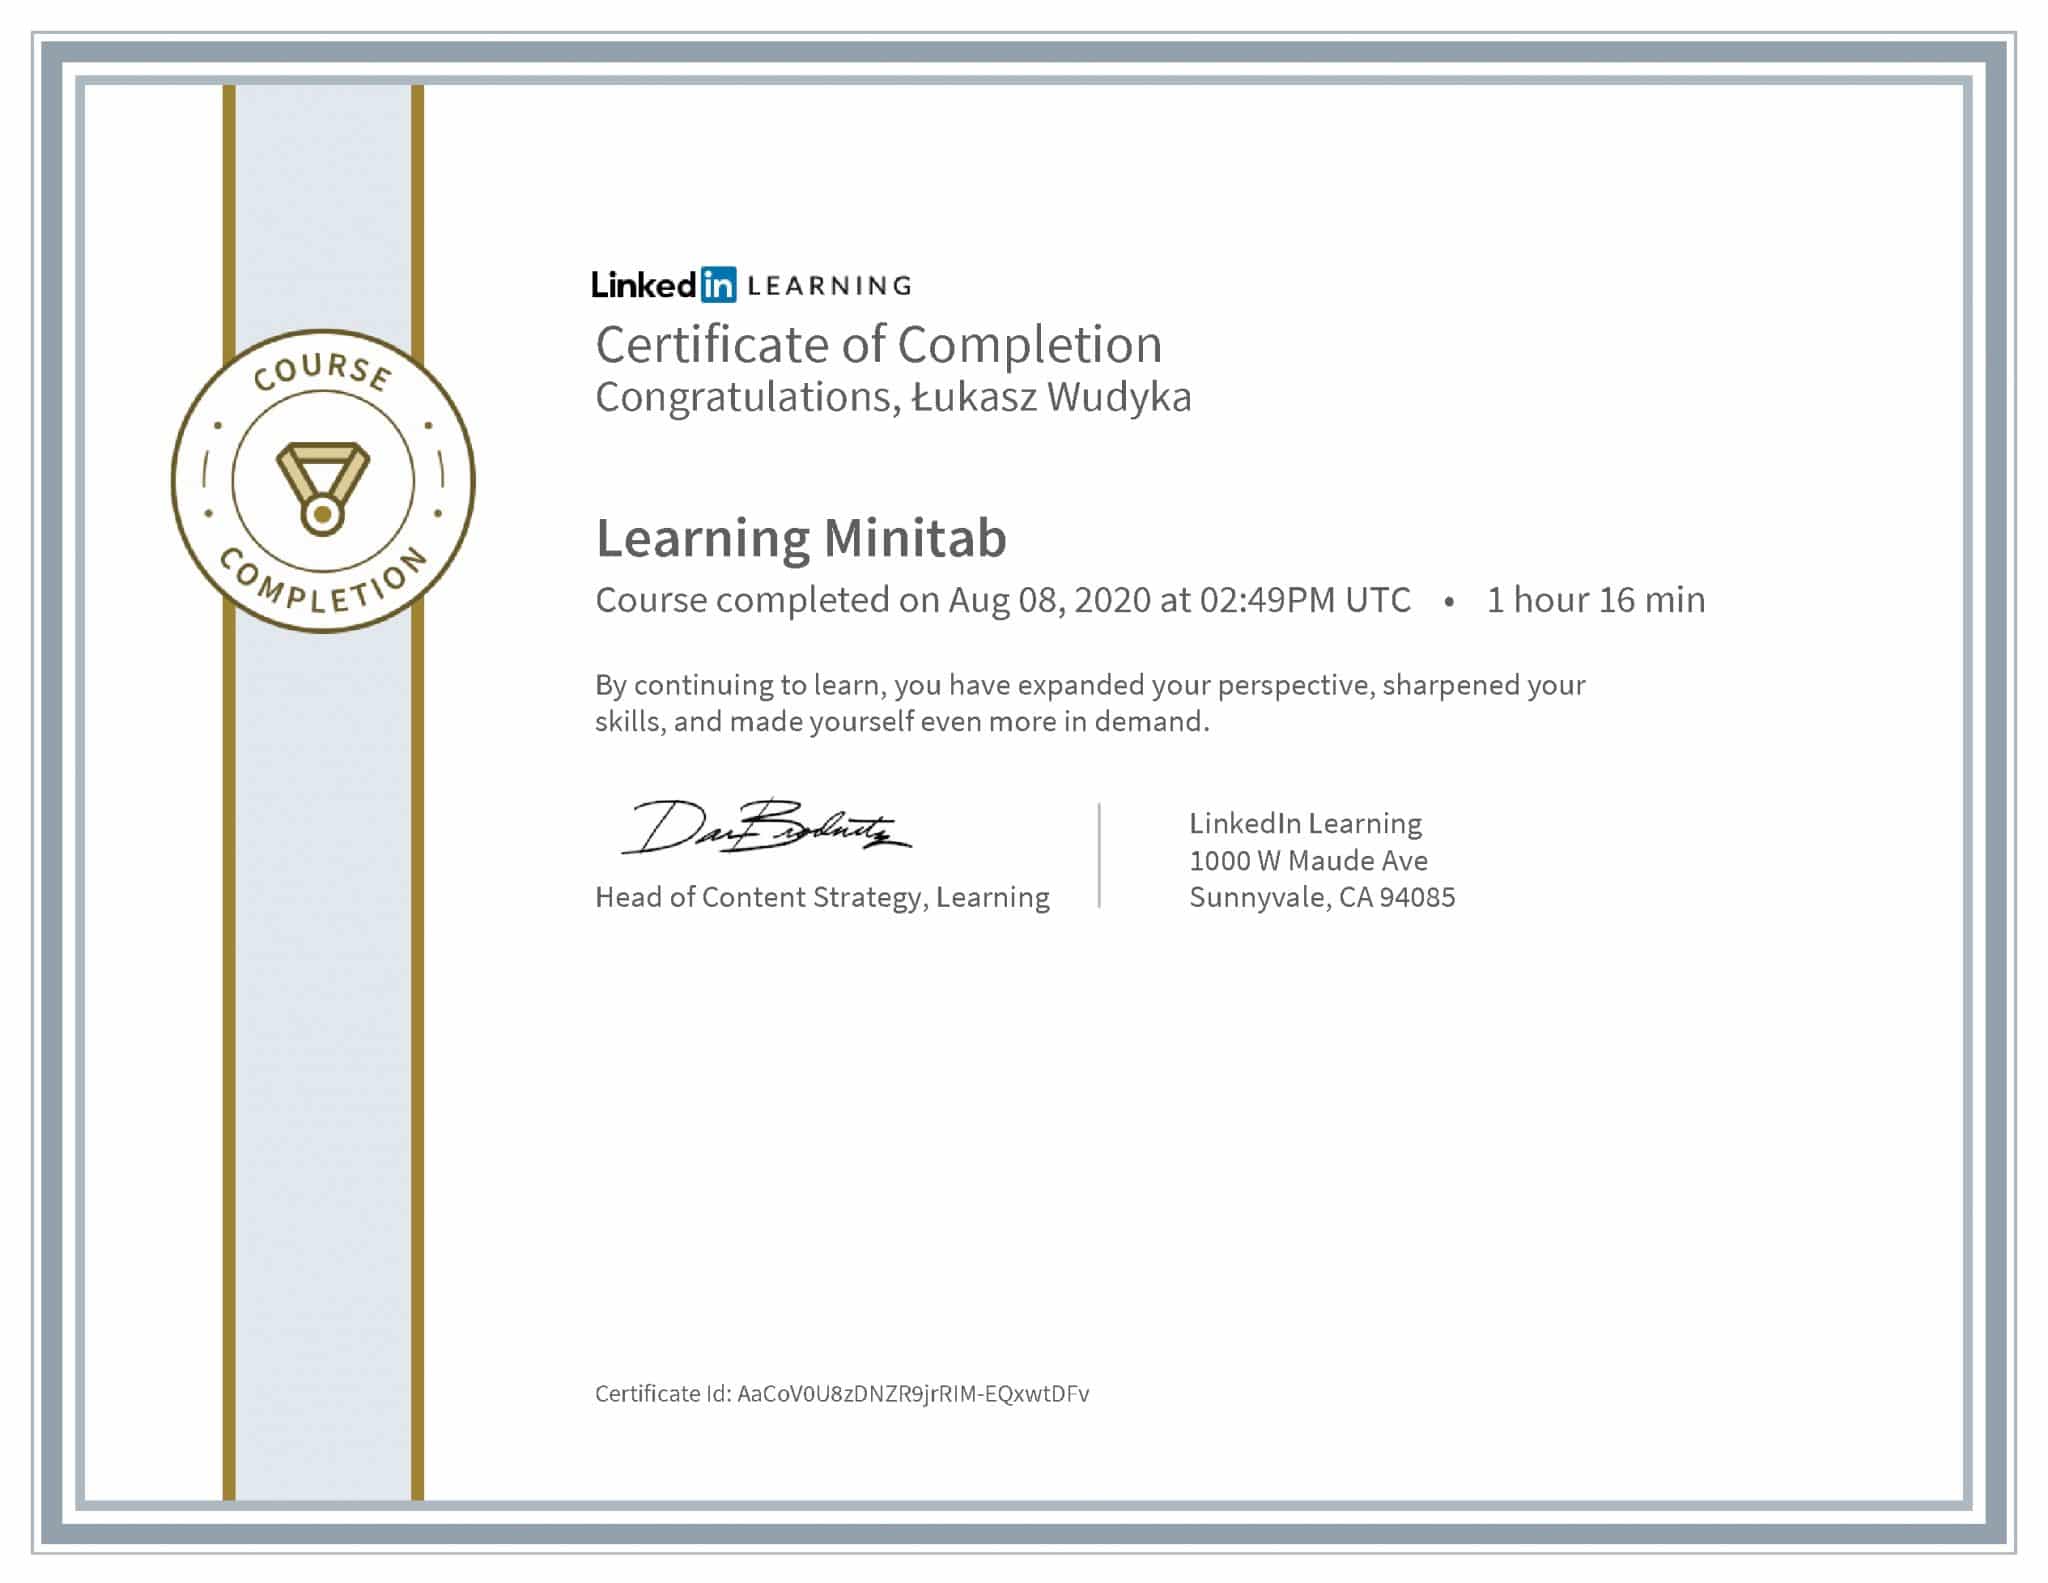 Łukasz Wudyka certyfikat LinkedIn Learning Minitab